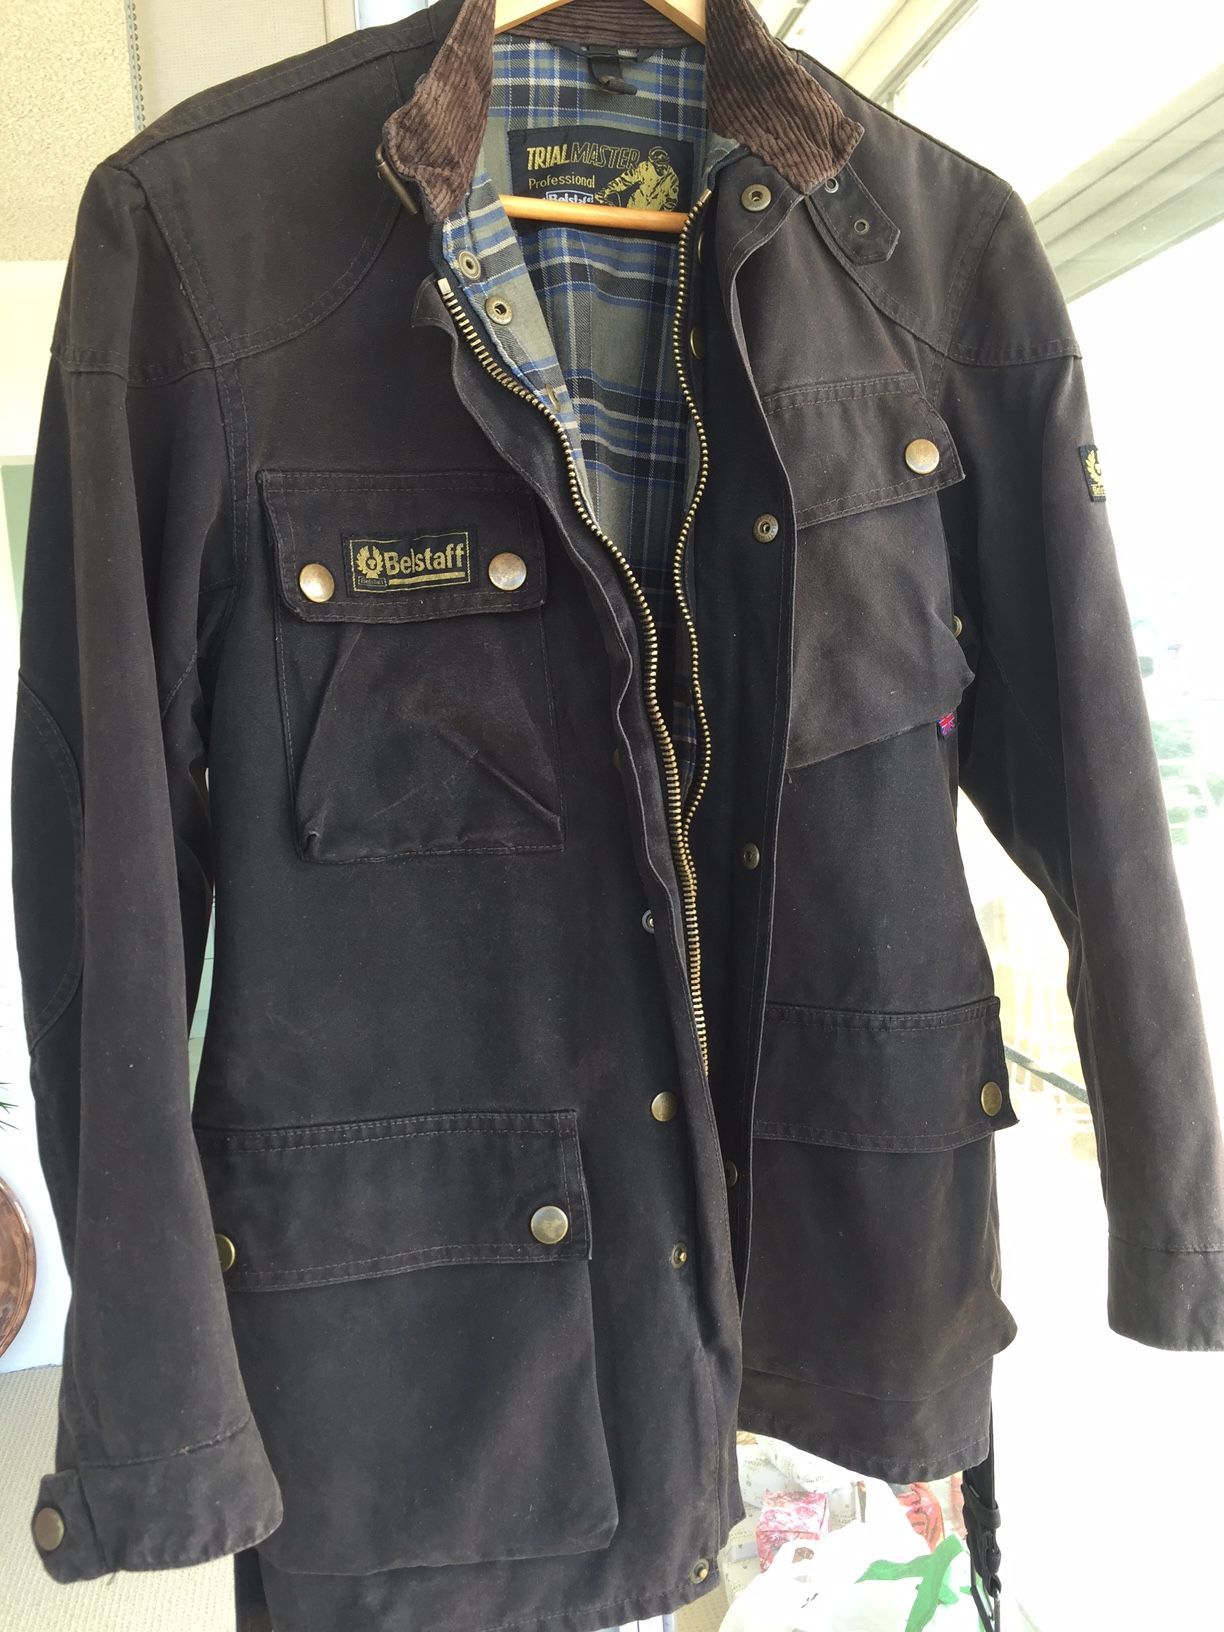 Authentic Belstaff Che Guevara Trialmaster Junior Jacket For Boys EU Size 8  NWT